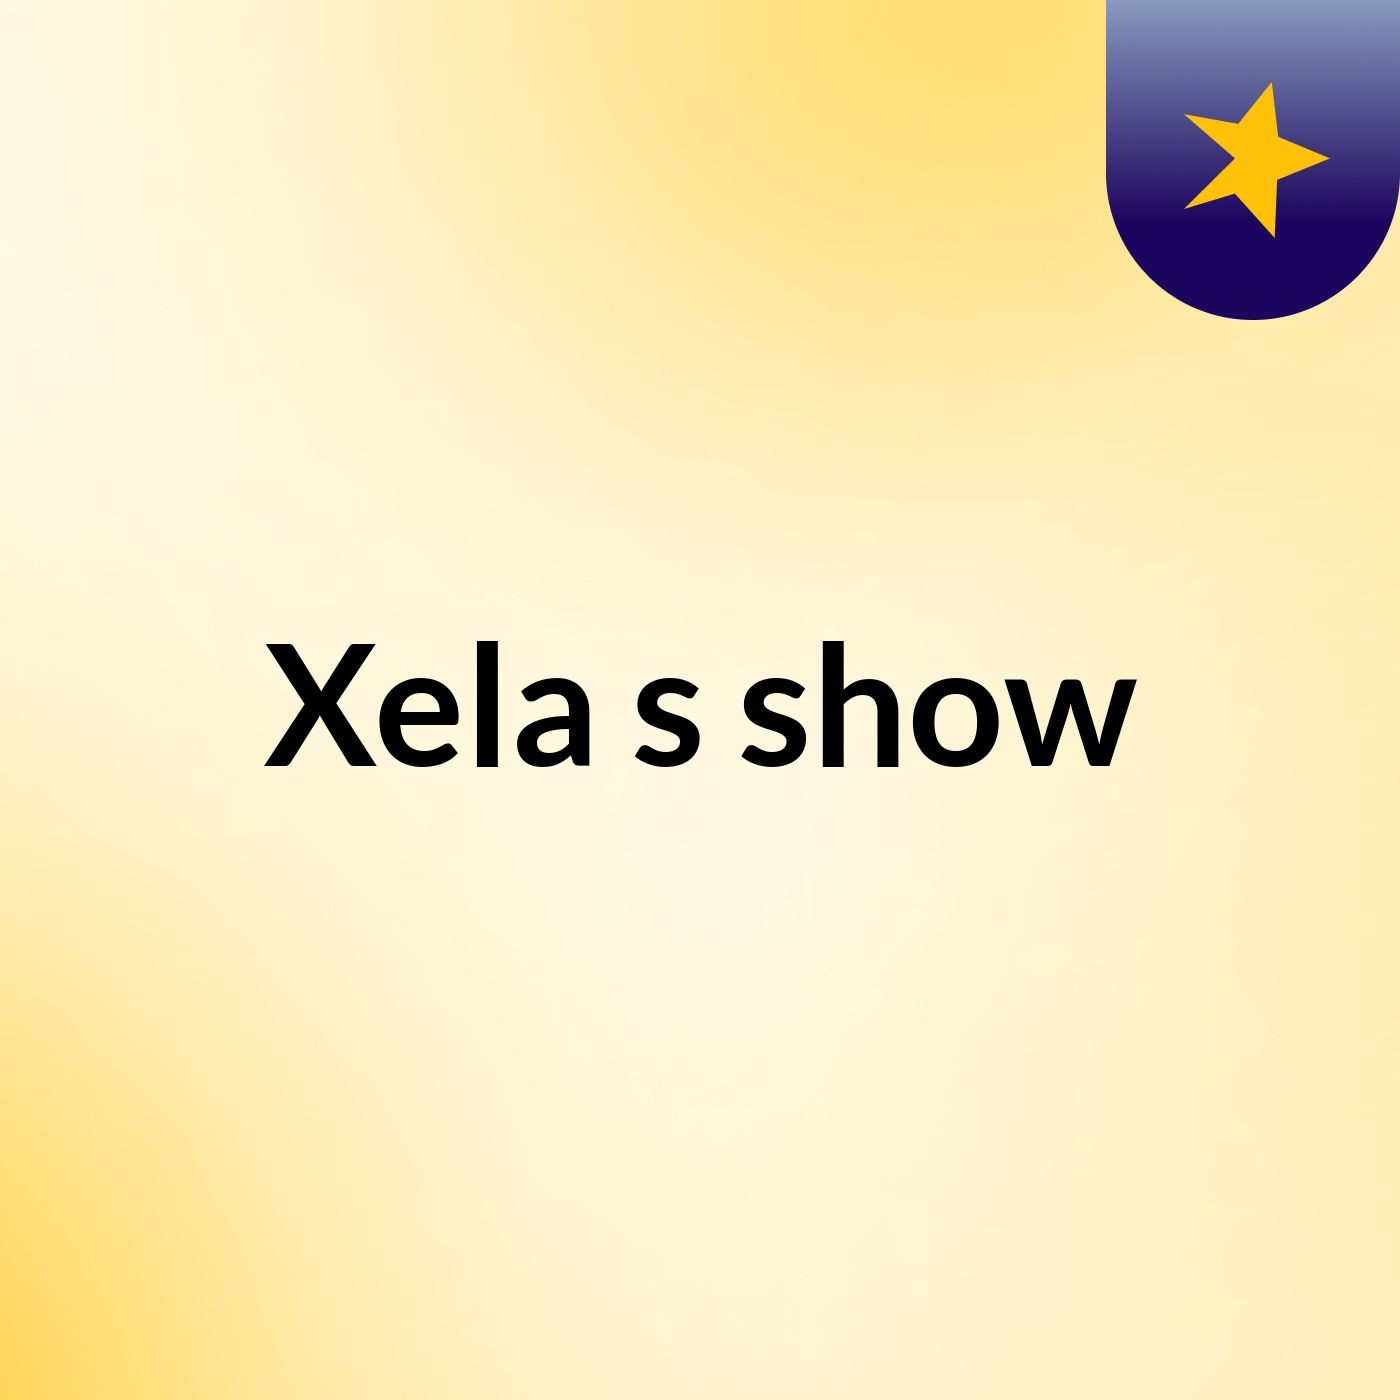 Xela's show